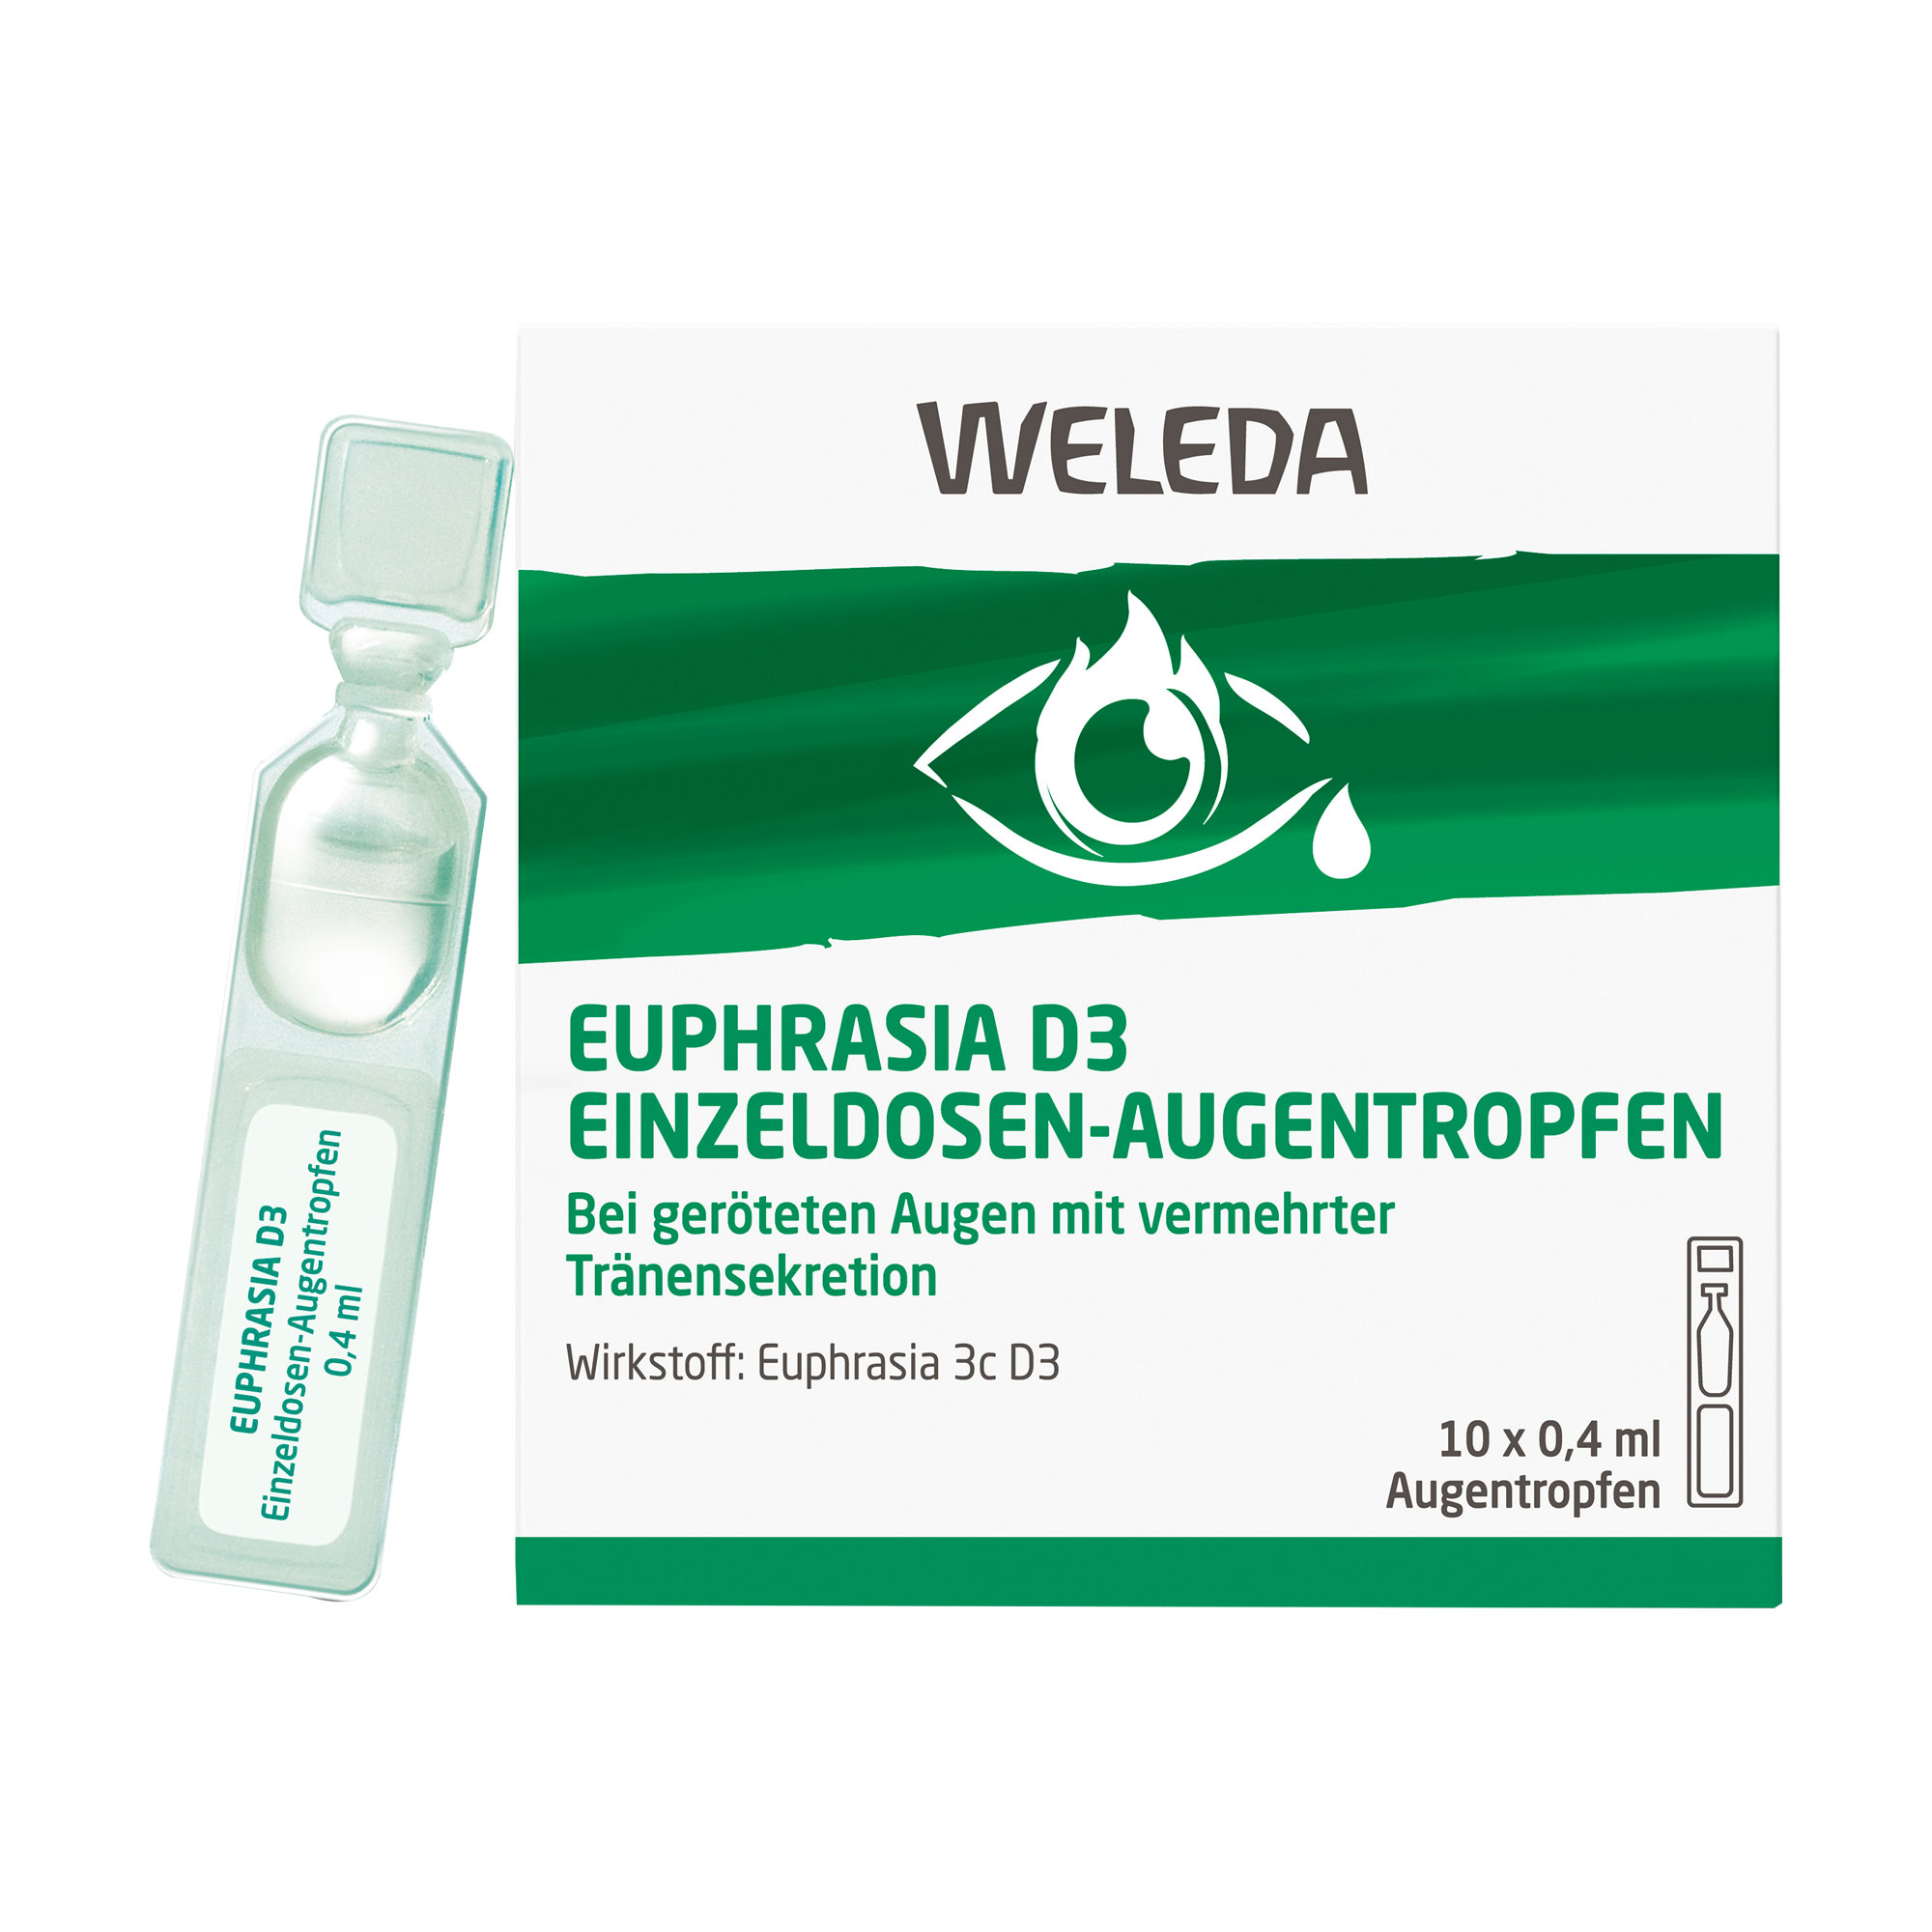 Weleda Euphrasia D3 Einzeldosen-Augentropfen